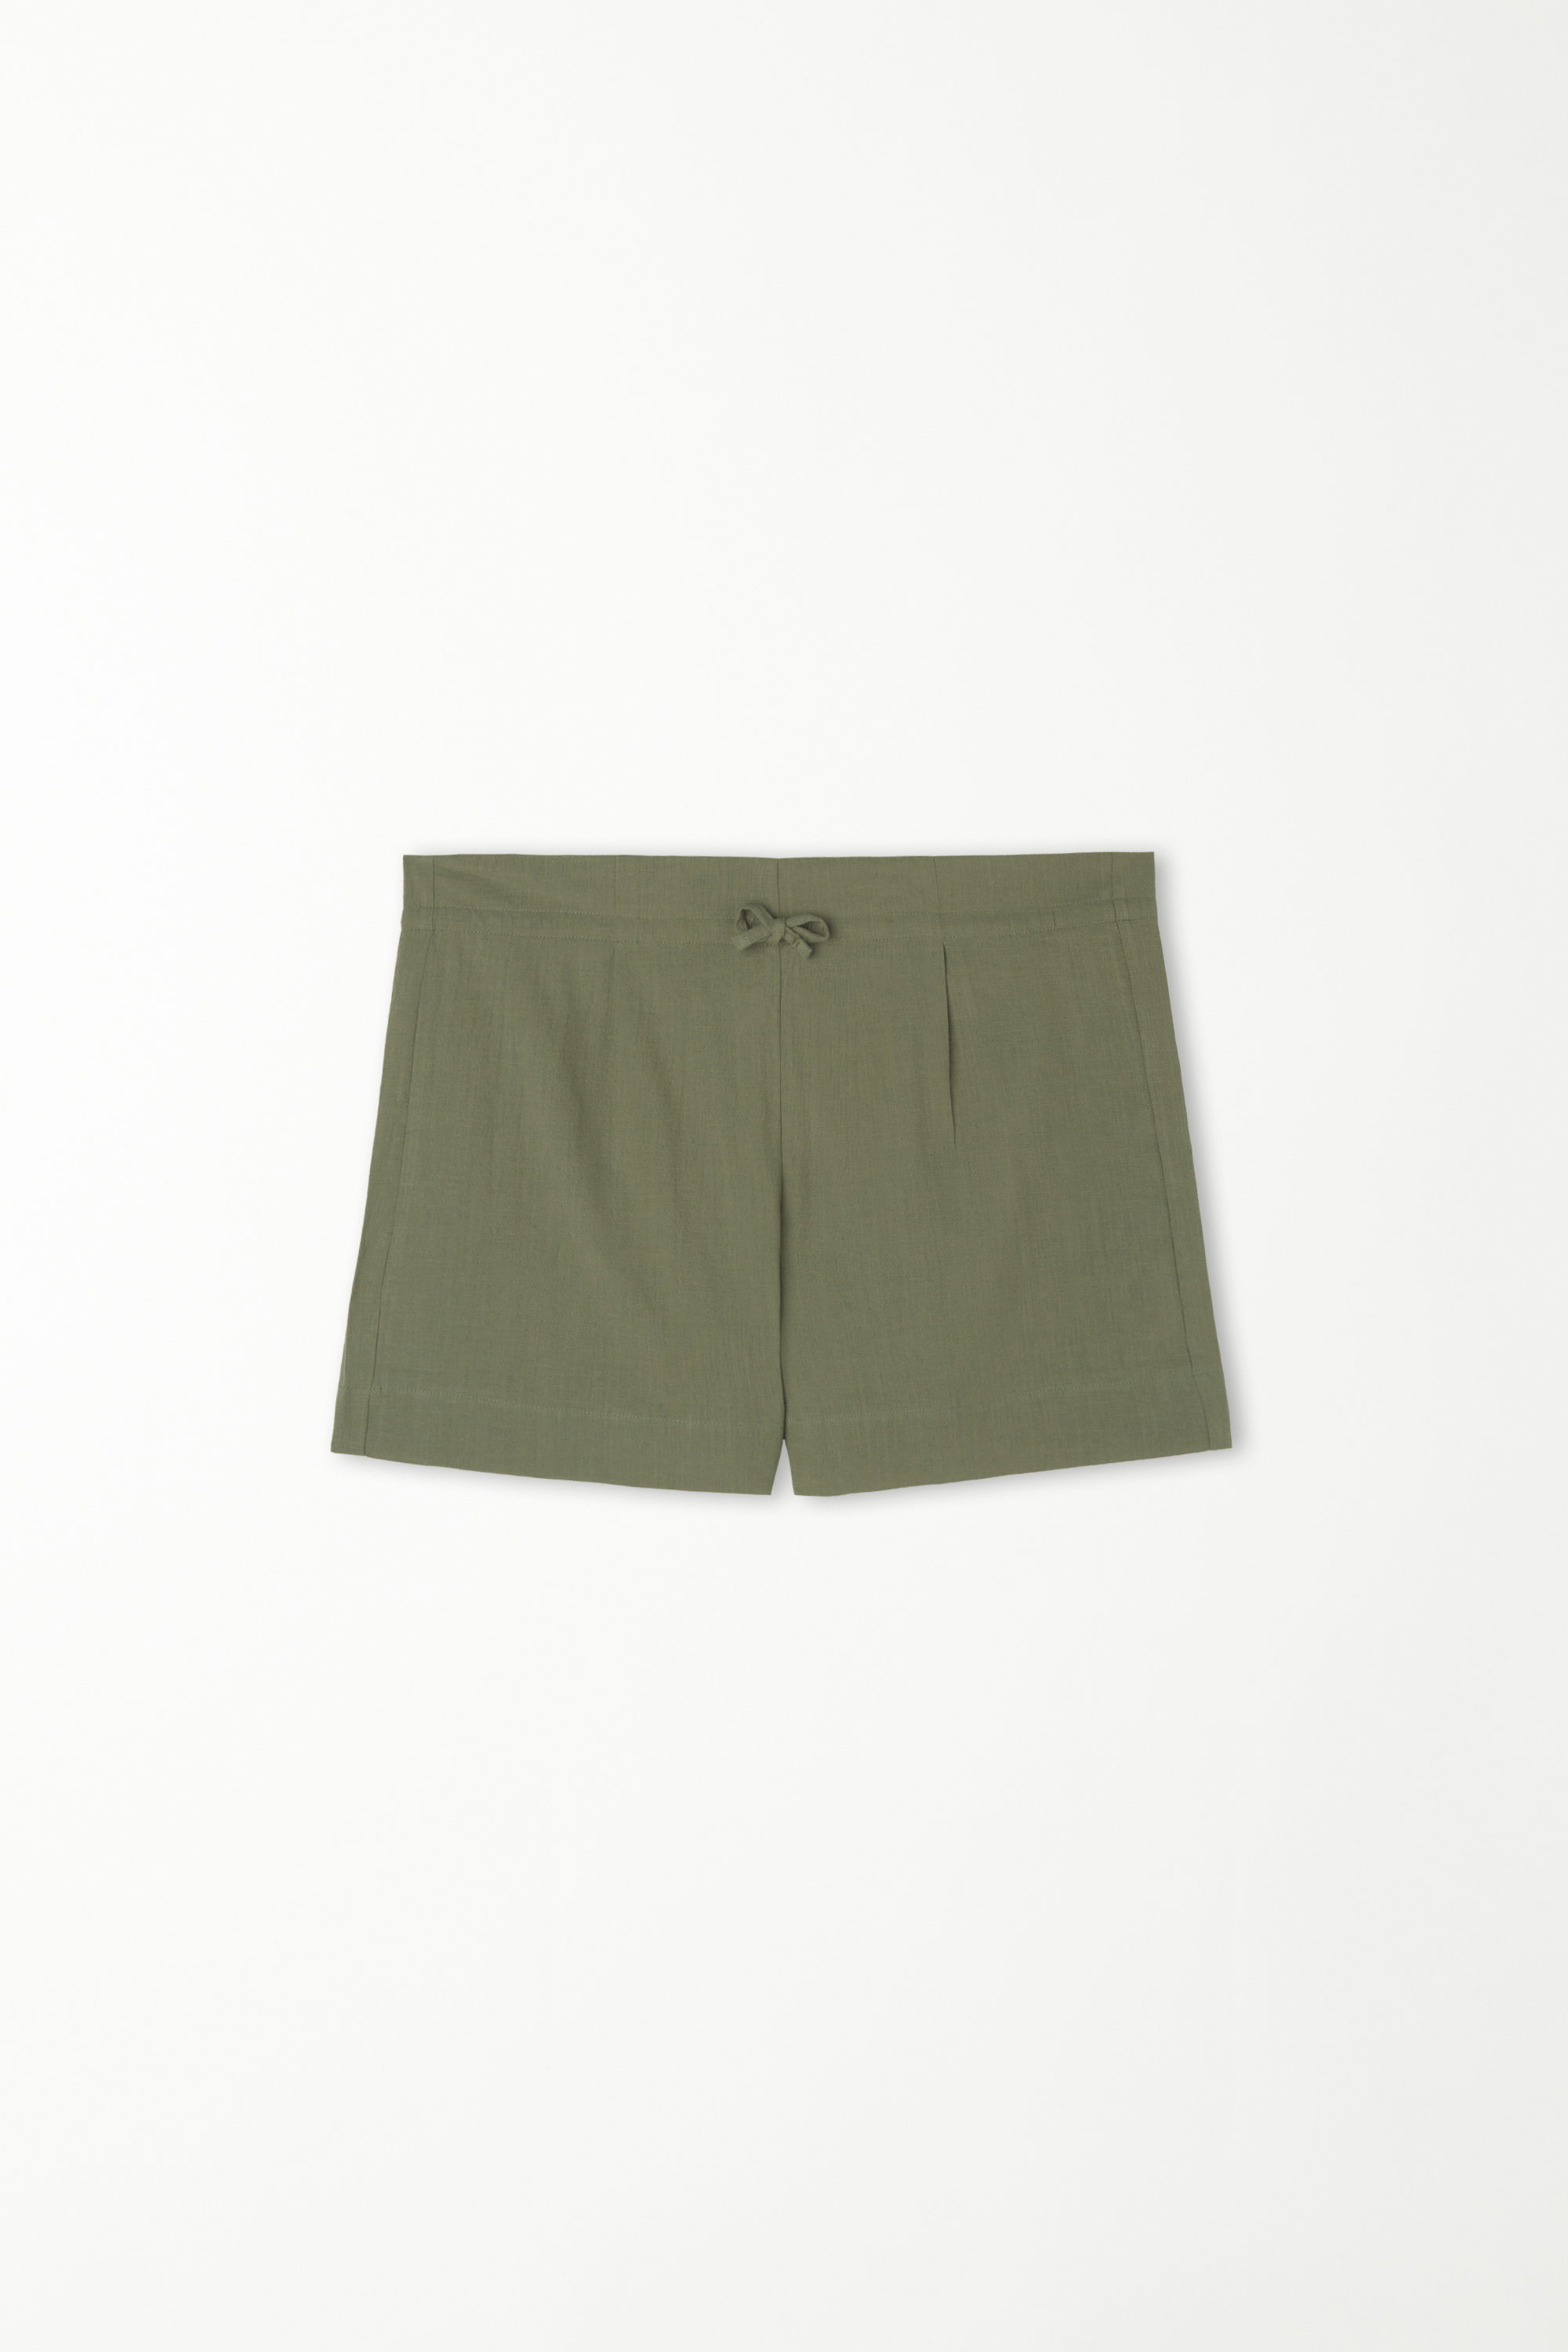 Drawstring Shorts in 100% Super Light Cotton